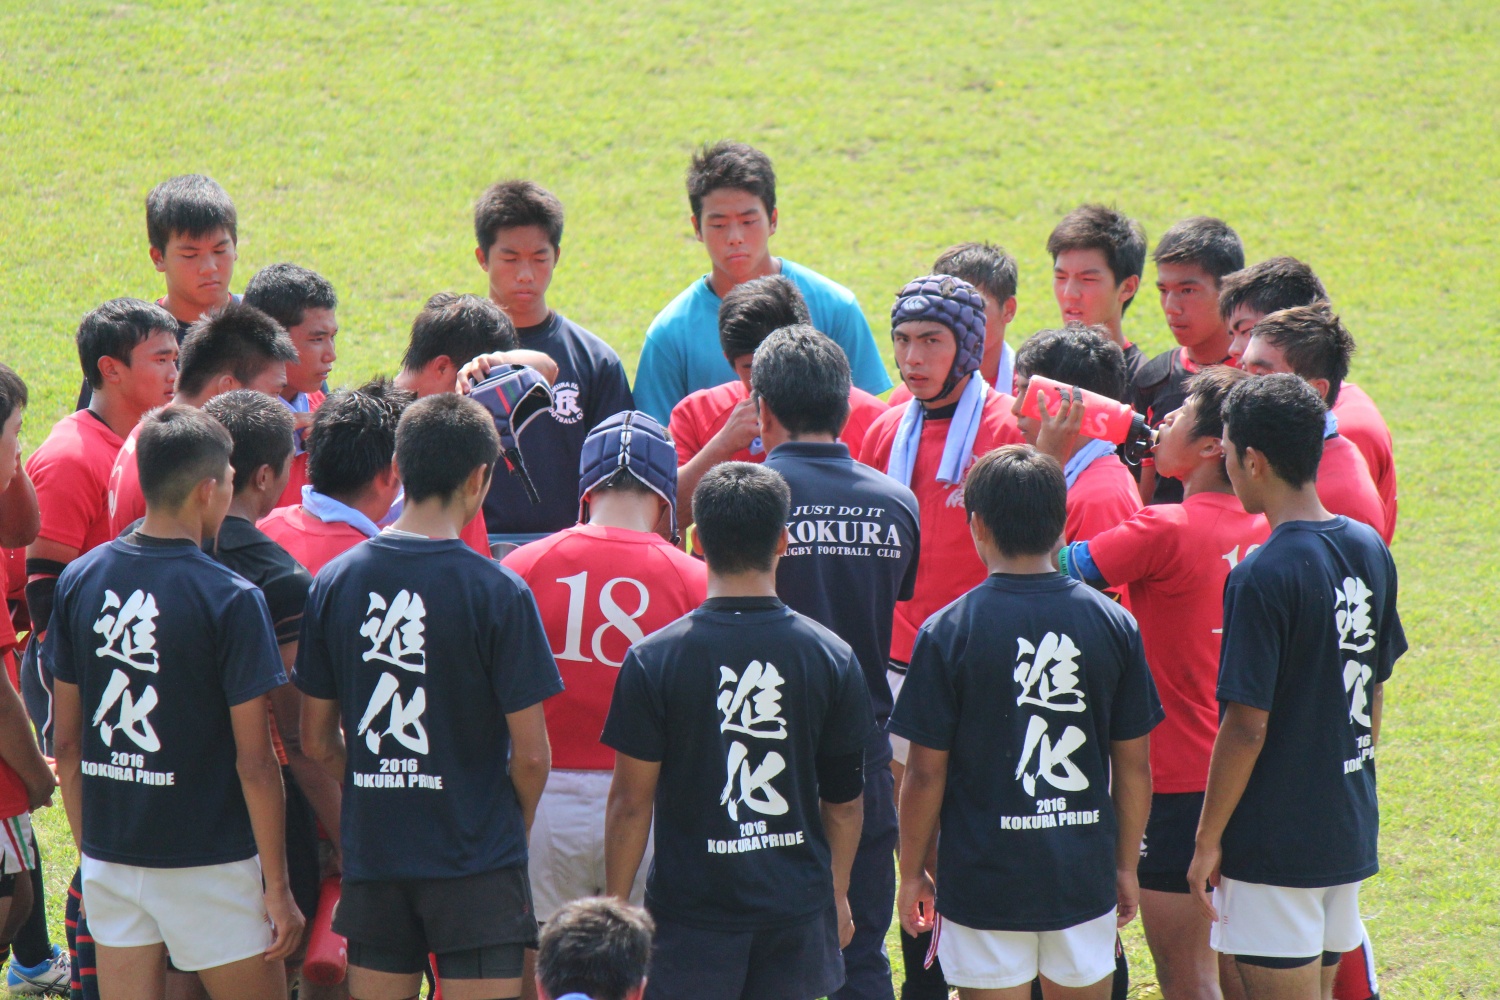 http://kokura-rugby.sakura.ne.jp/IMG_3242_xlarge.JPG